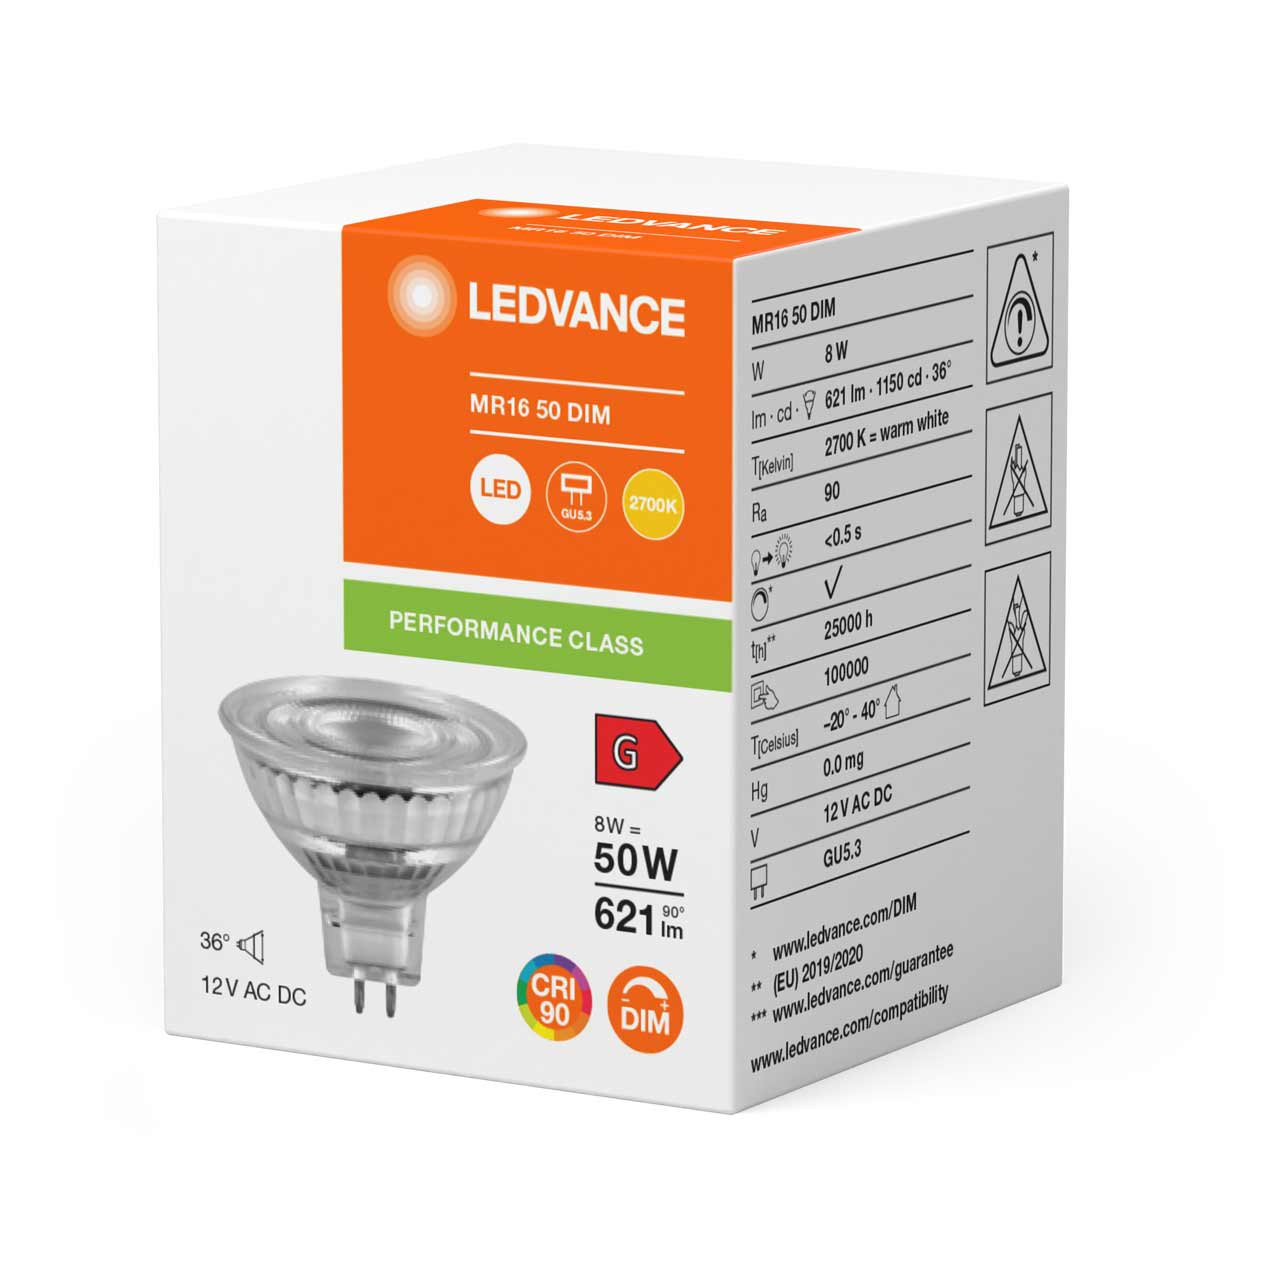 Ledvance LED MR16 Bulbs 5W GU5.3 12V Dimmable Performance Class (5 Pack)  Warm White 36°